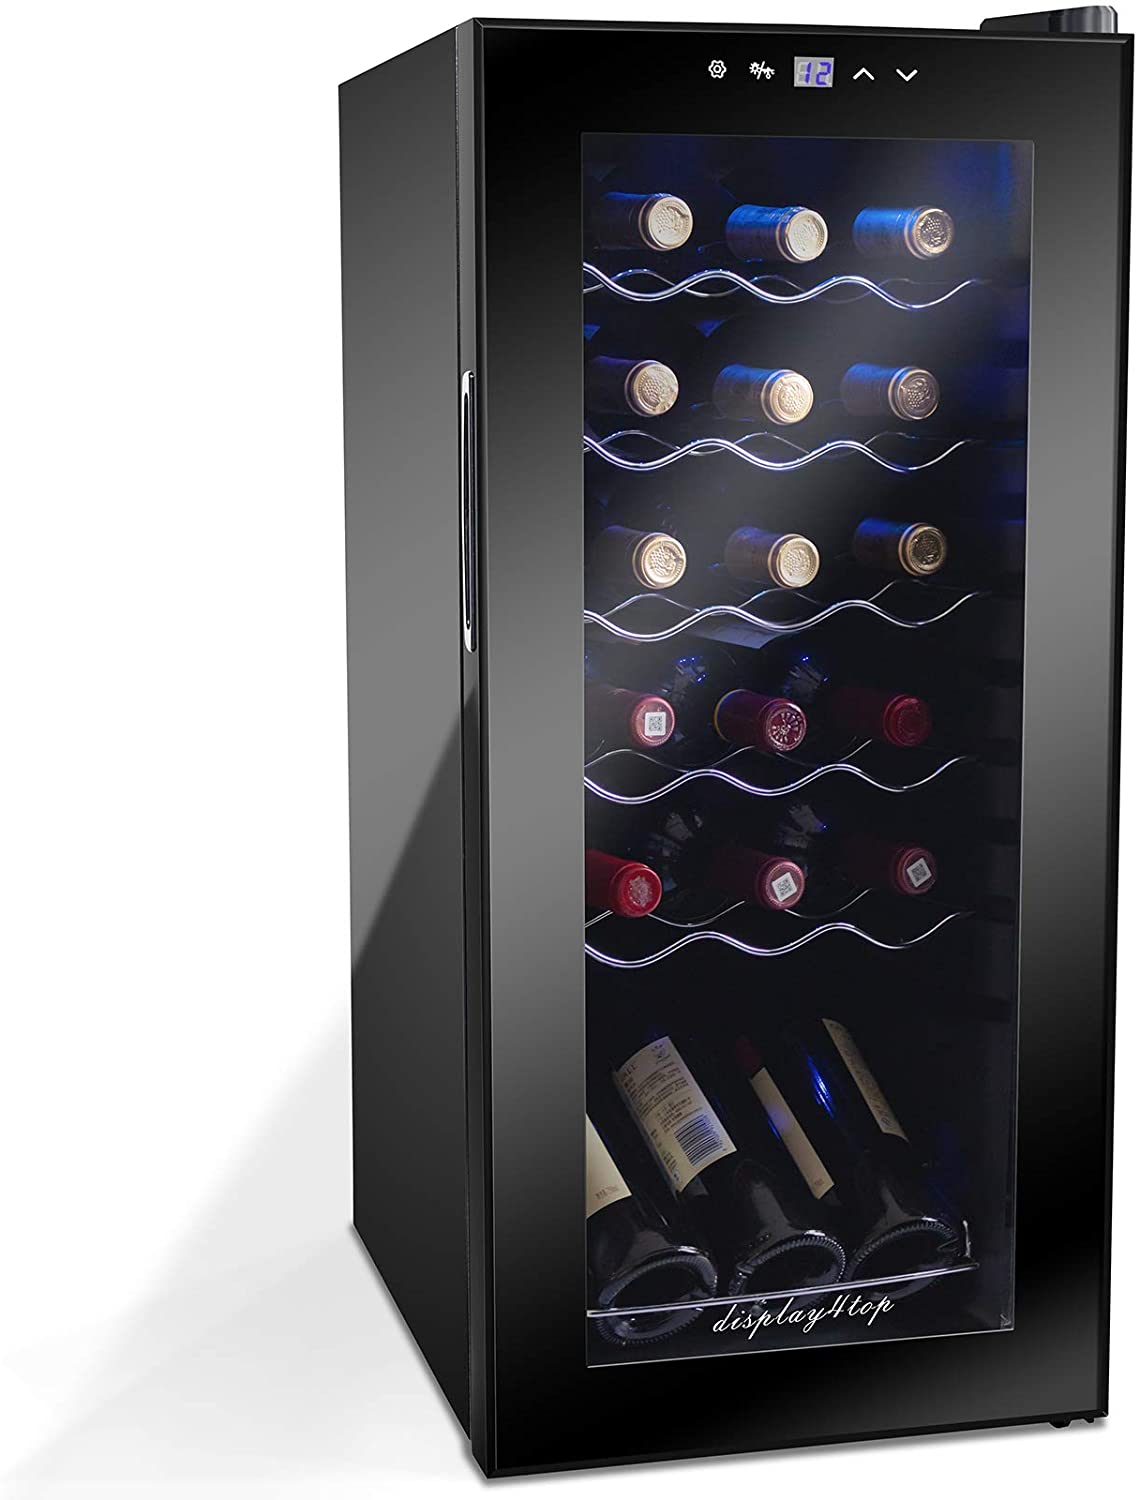 vinoteca Display4top